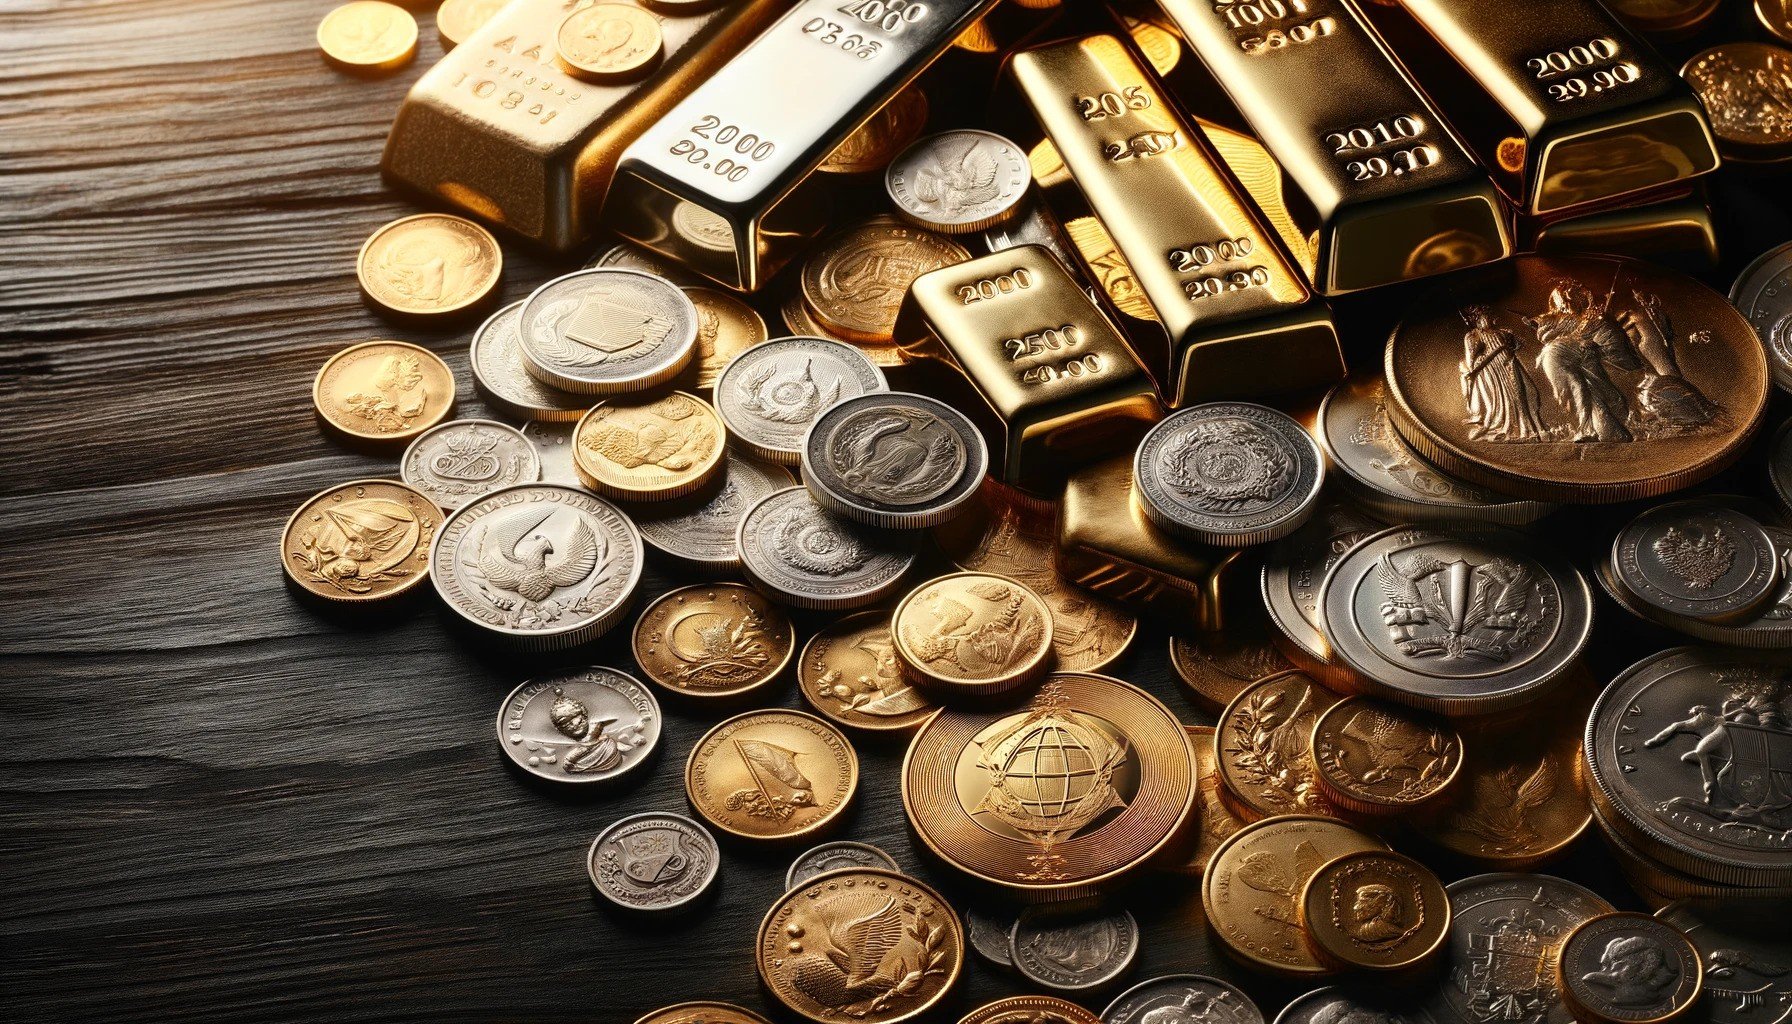 Money Metals Exchange: A Vanguard in Precious Metals and Sound Money Advocacy